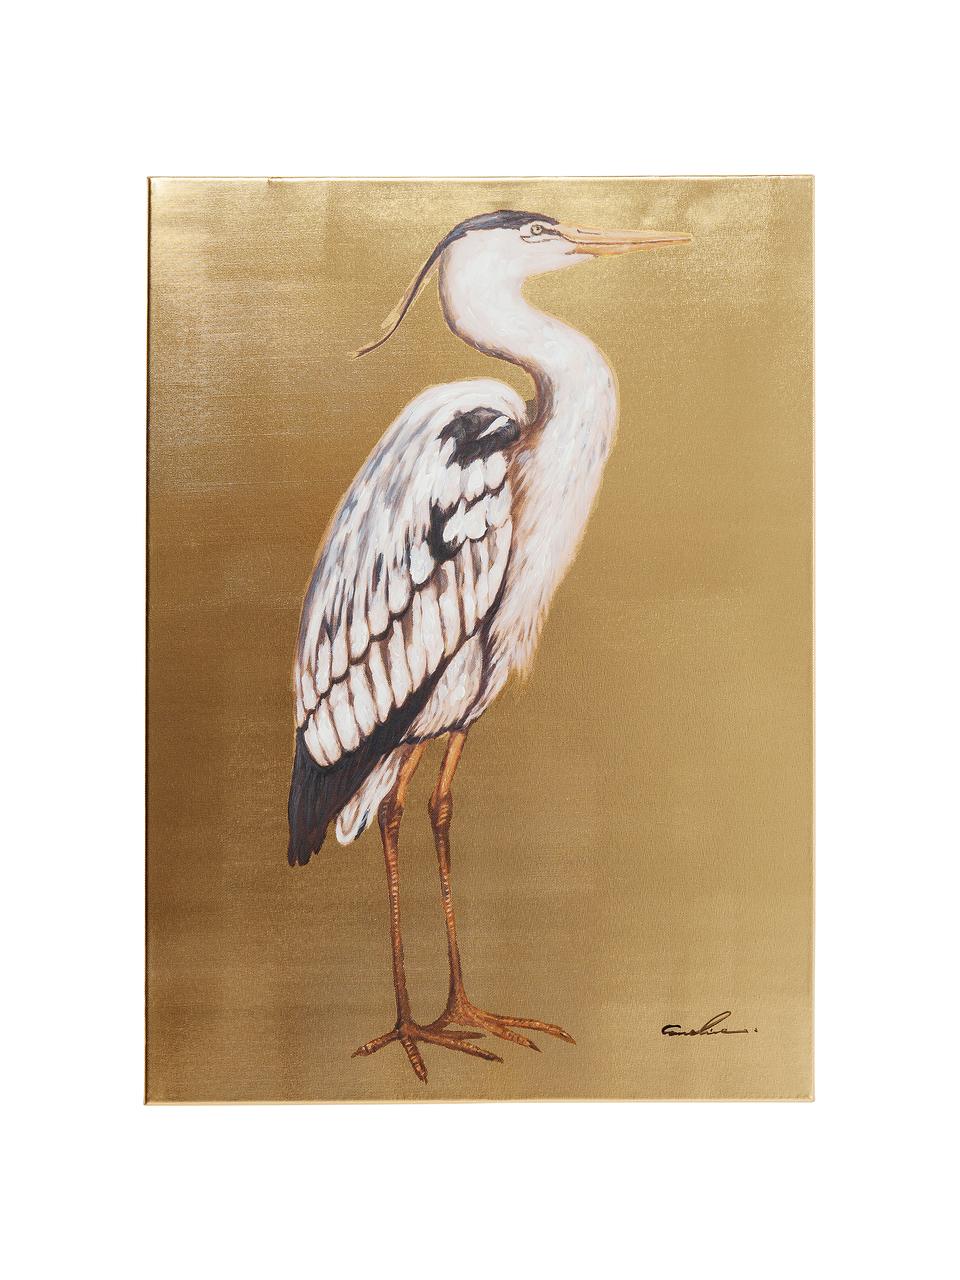 Bemalter Leinwanddruck Heron, Bild: Digitaldruck mit Acrylfar, Goldfarben, Weiß, Schwarz, B 50 x H 70 cm